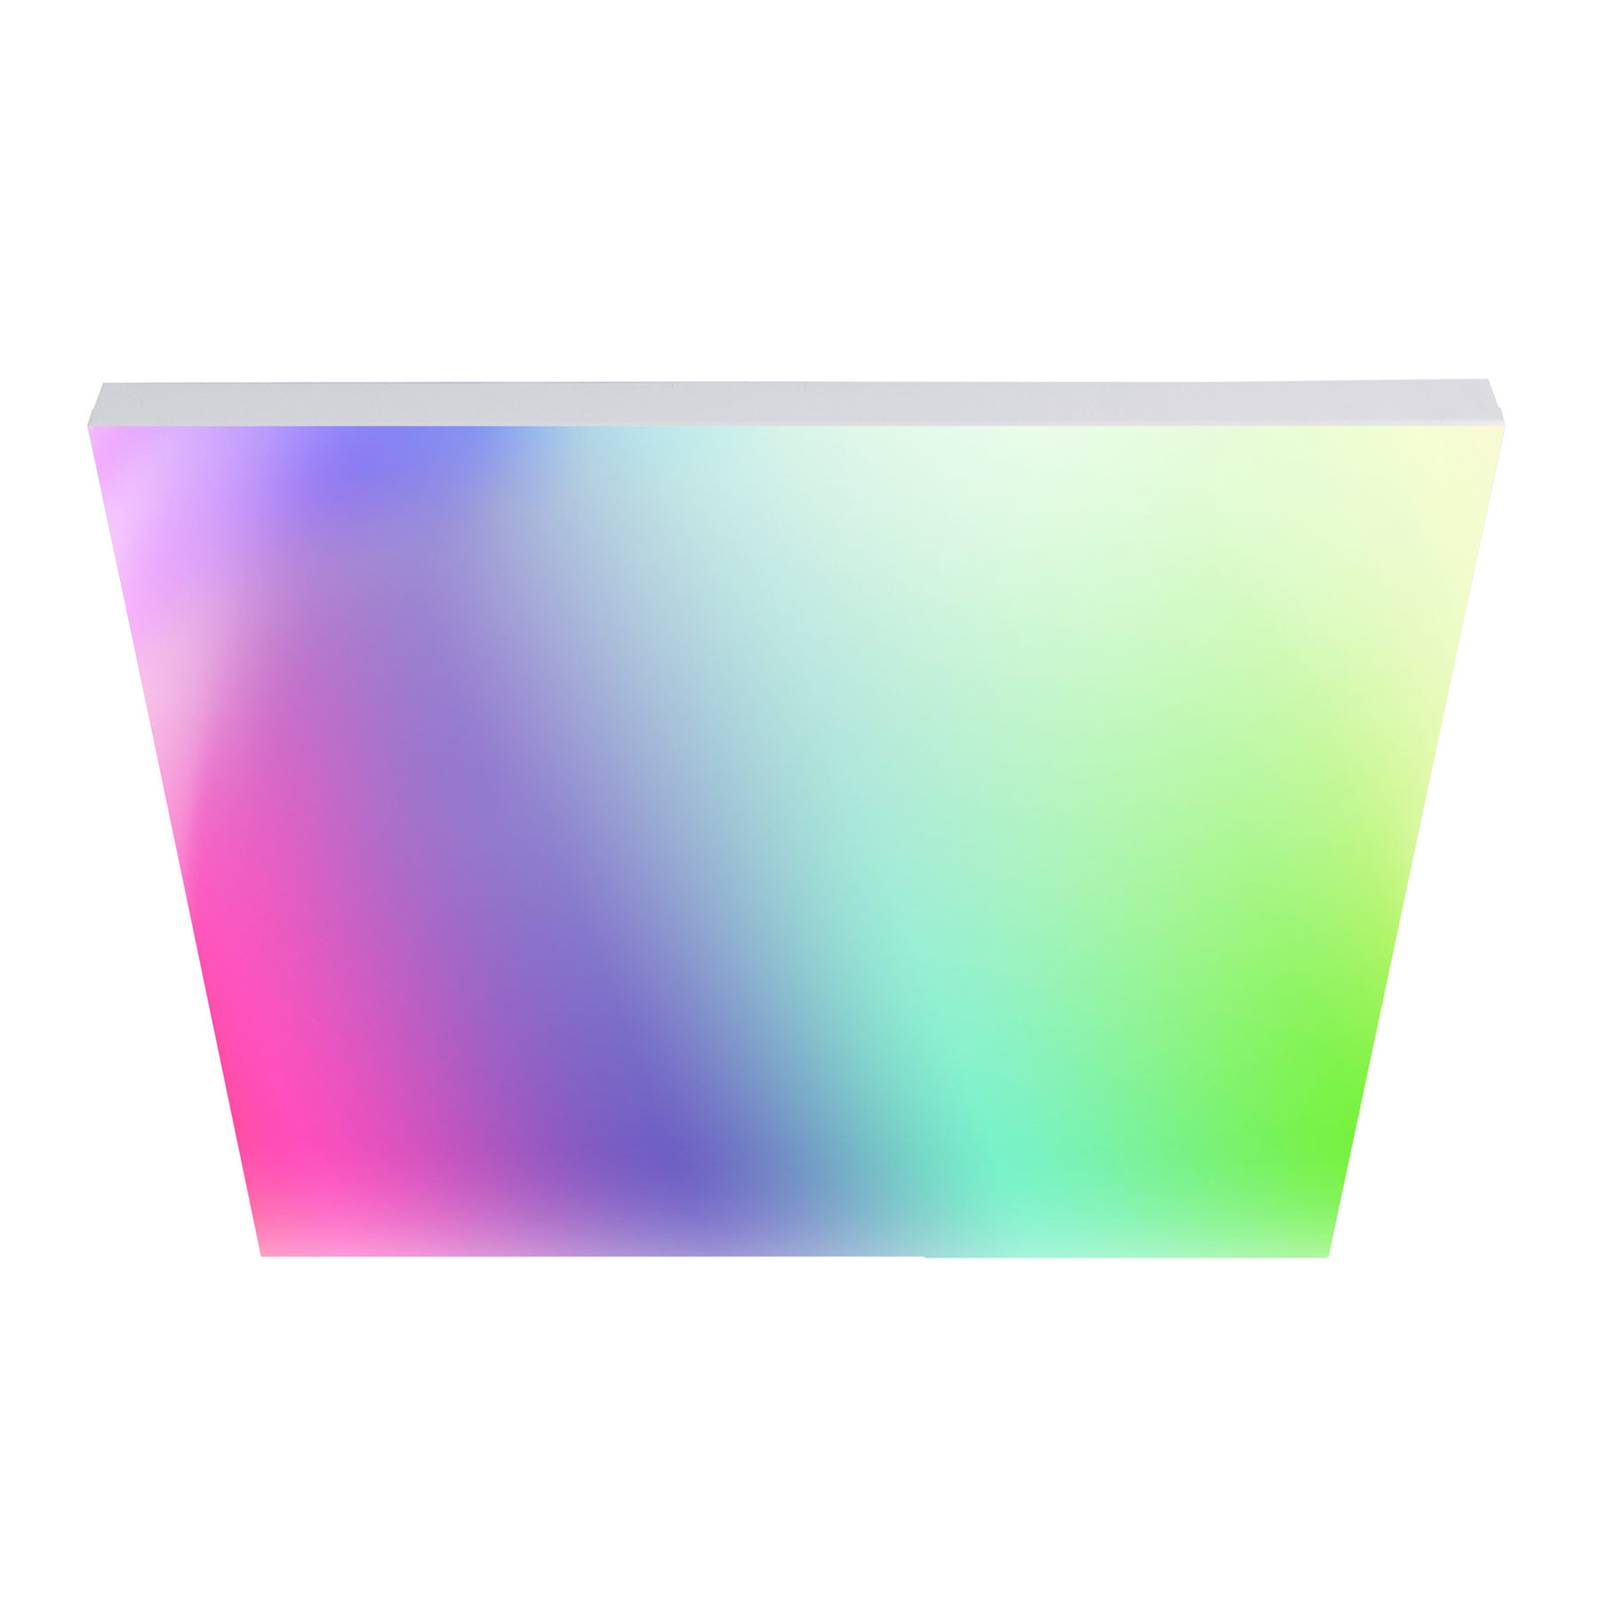 Müller Licht tint LED panel Loris, 45 x 45 cm